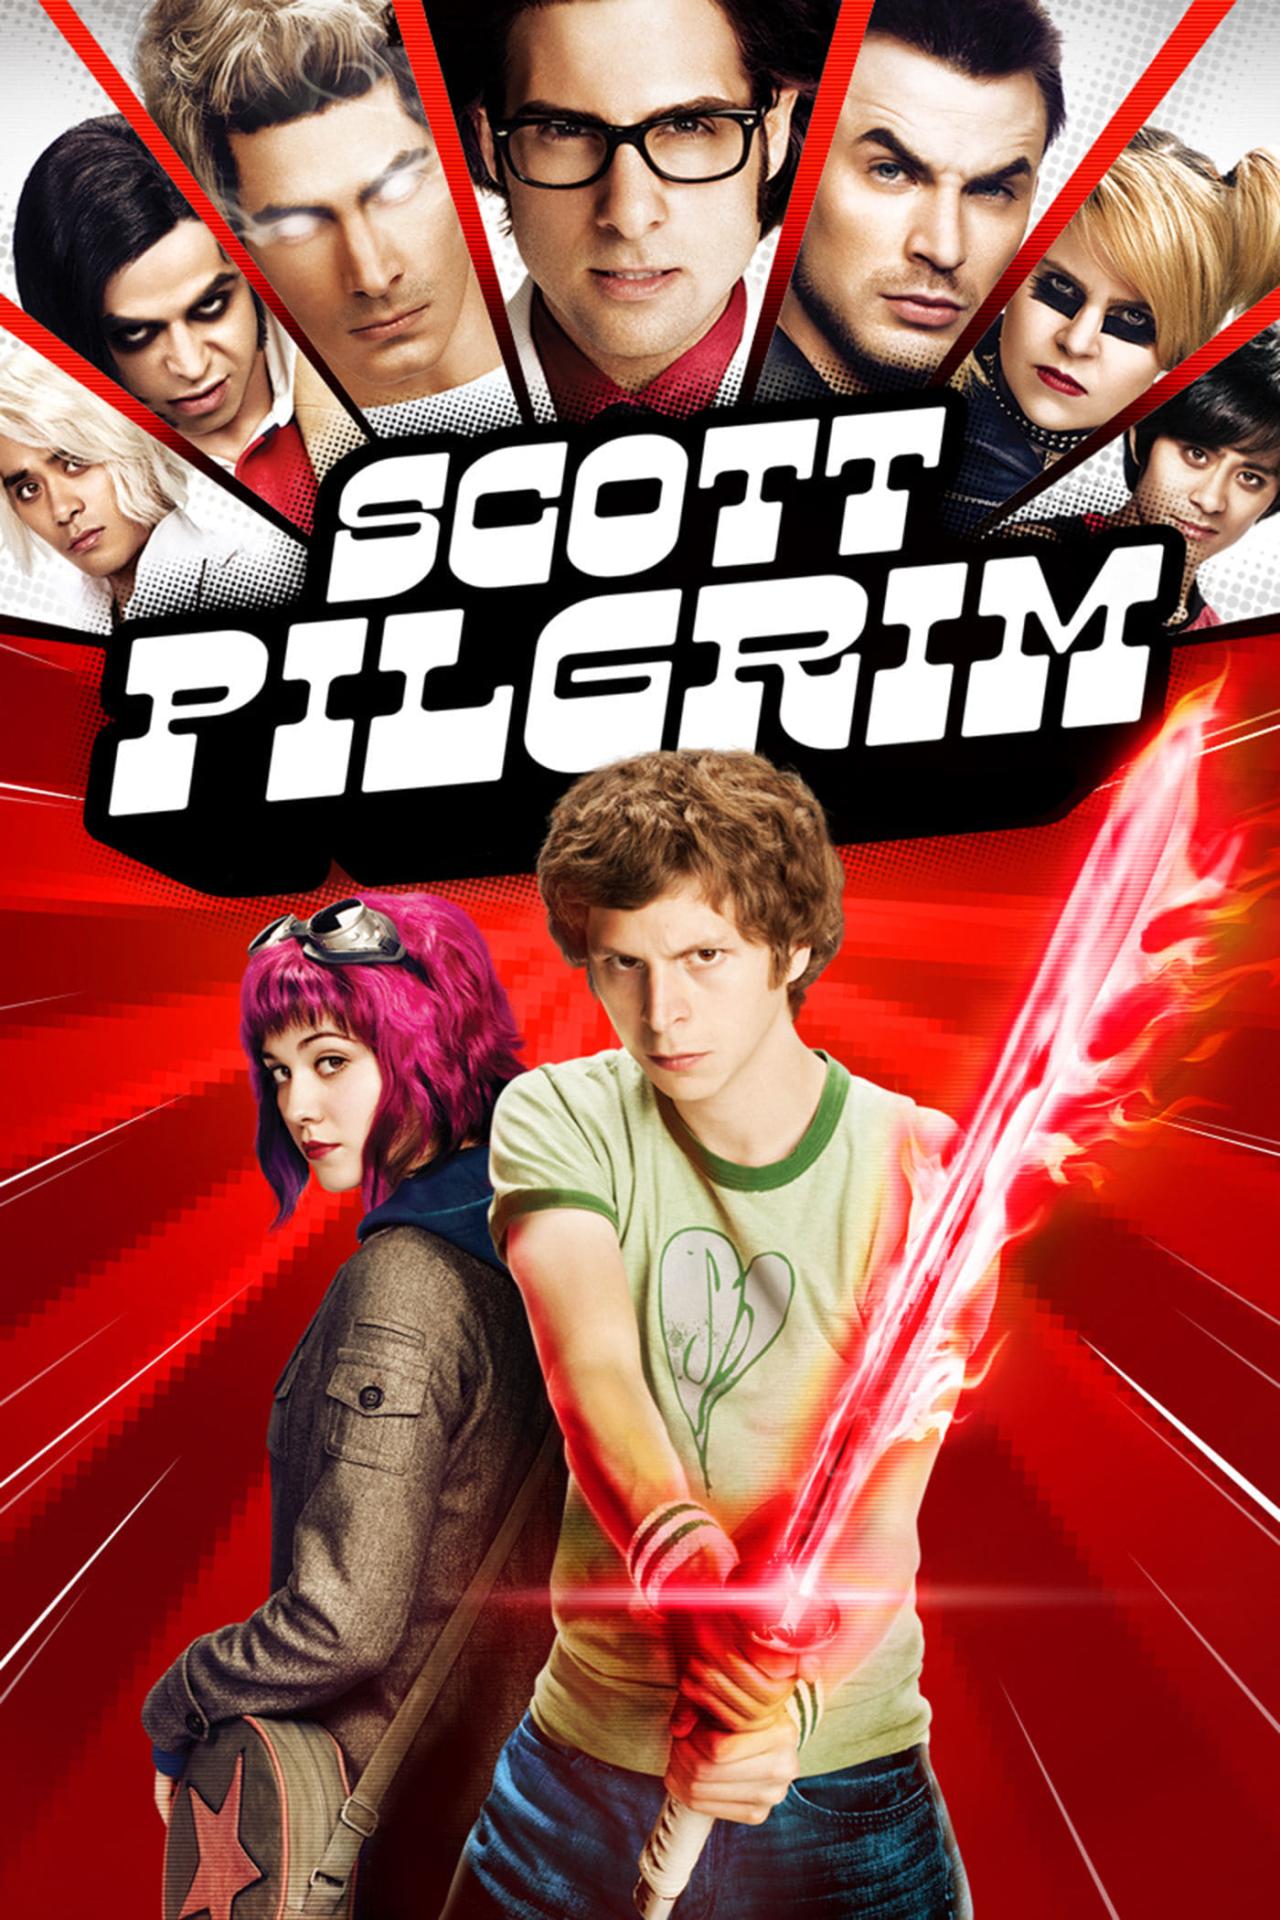 Affiche du film Scott Pilgrim poster